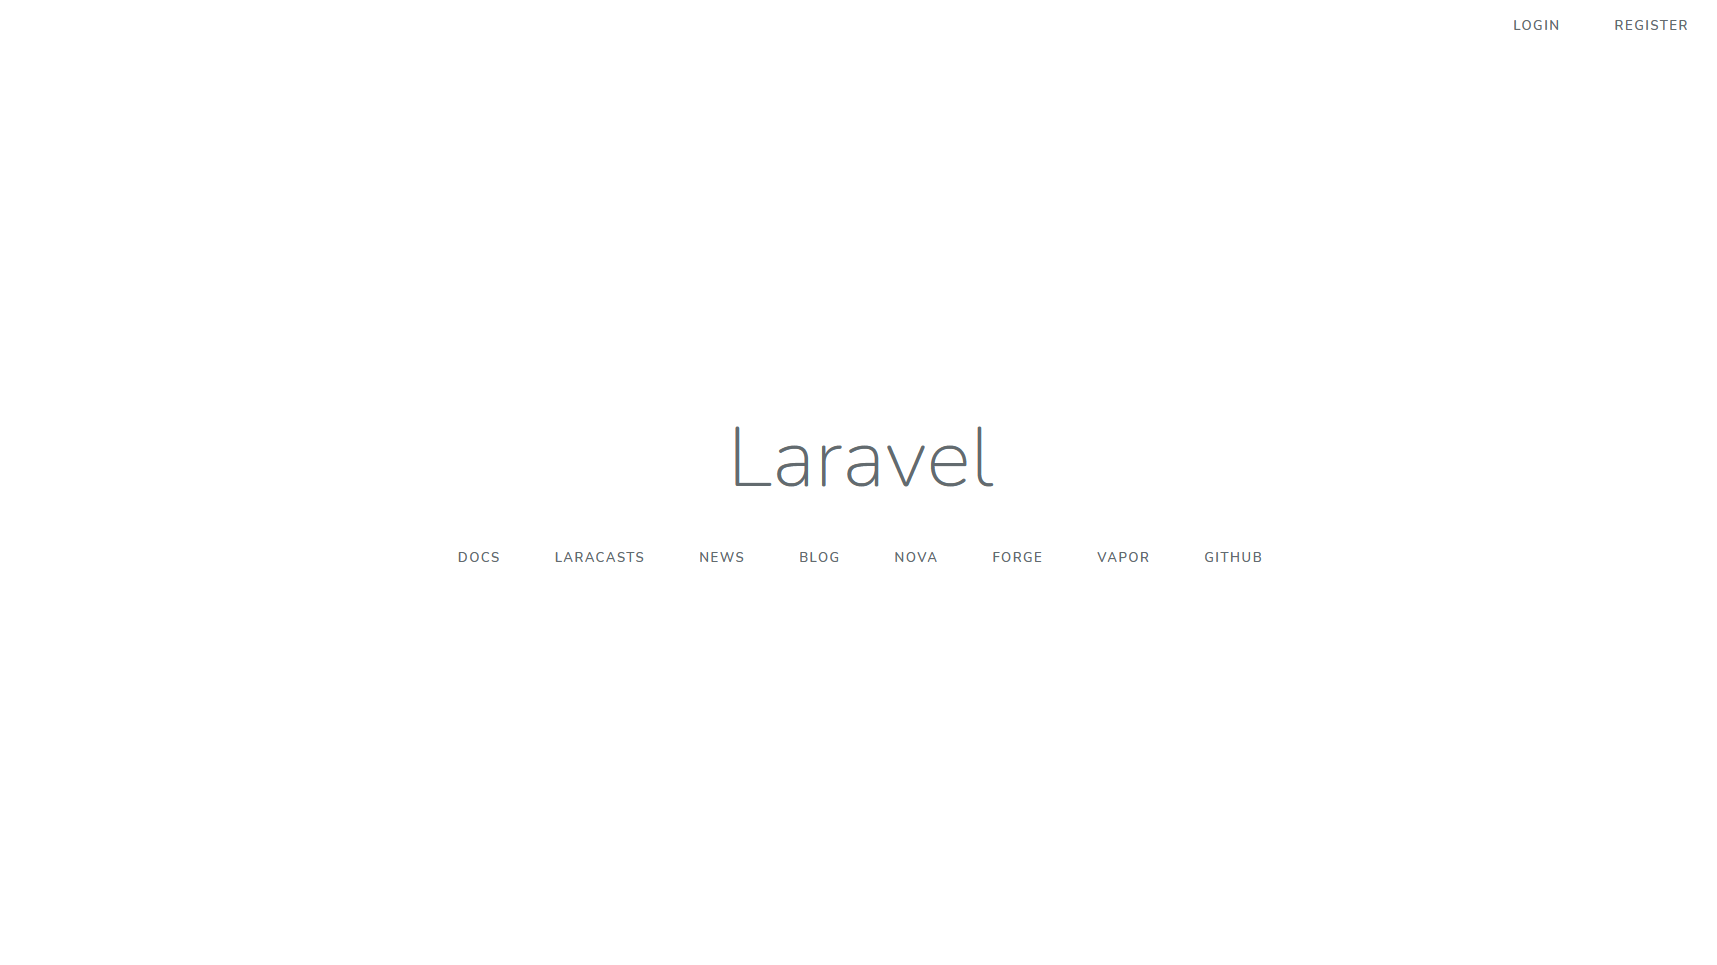 laravel_login